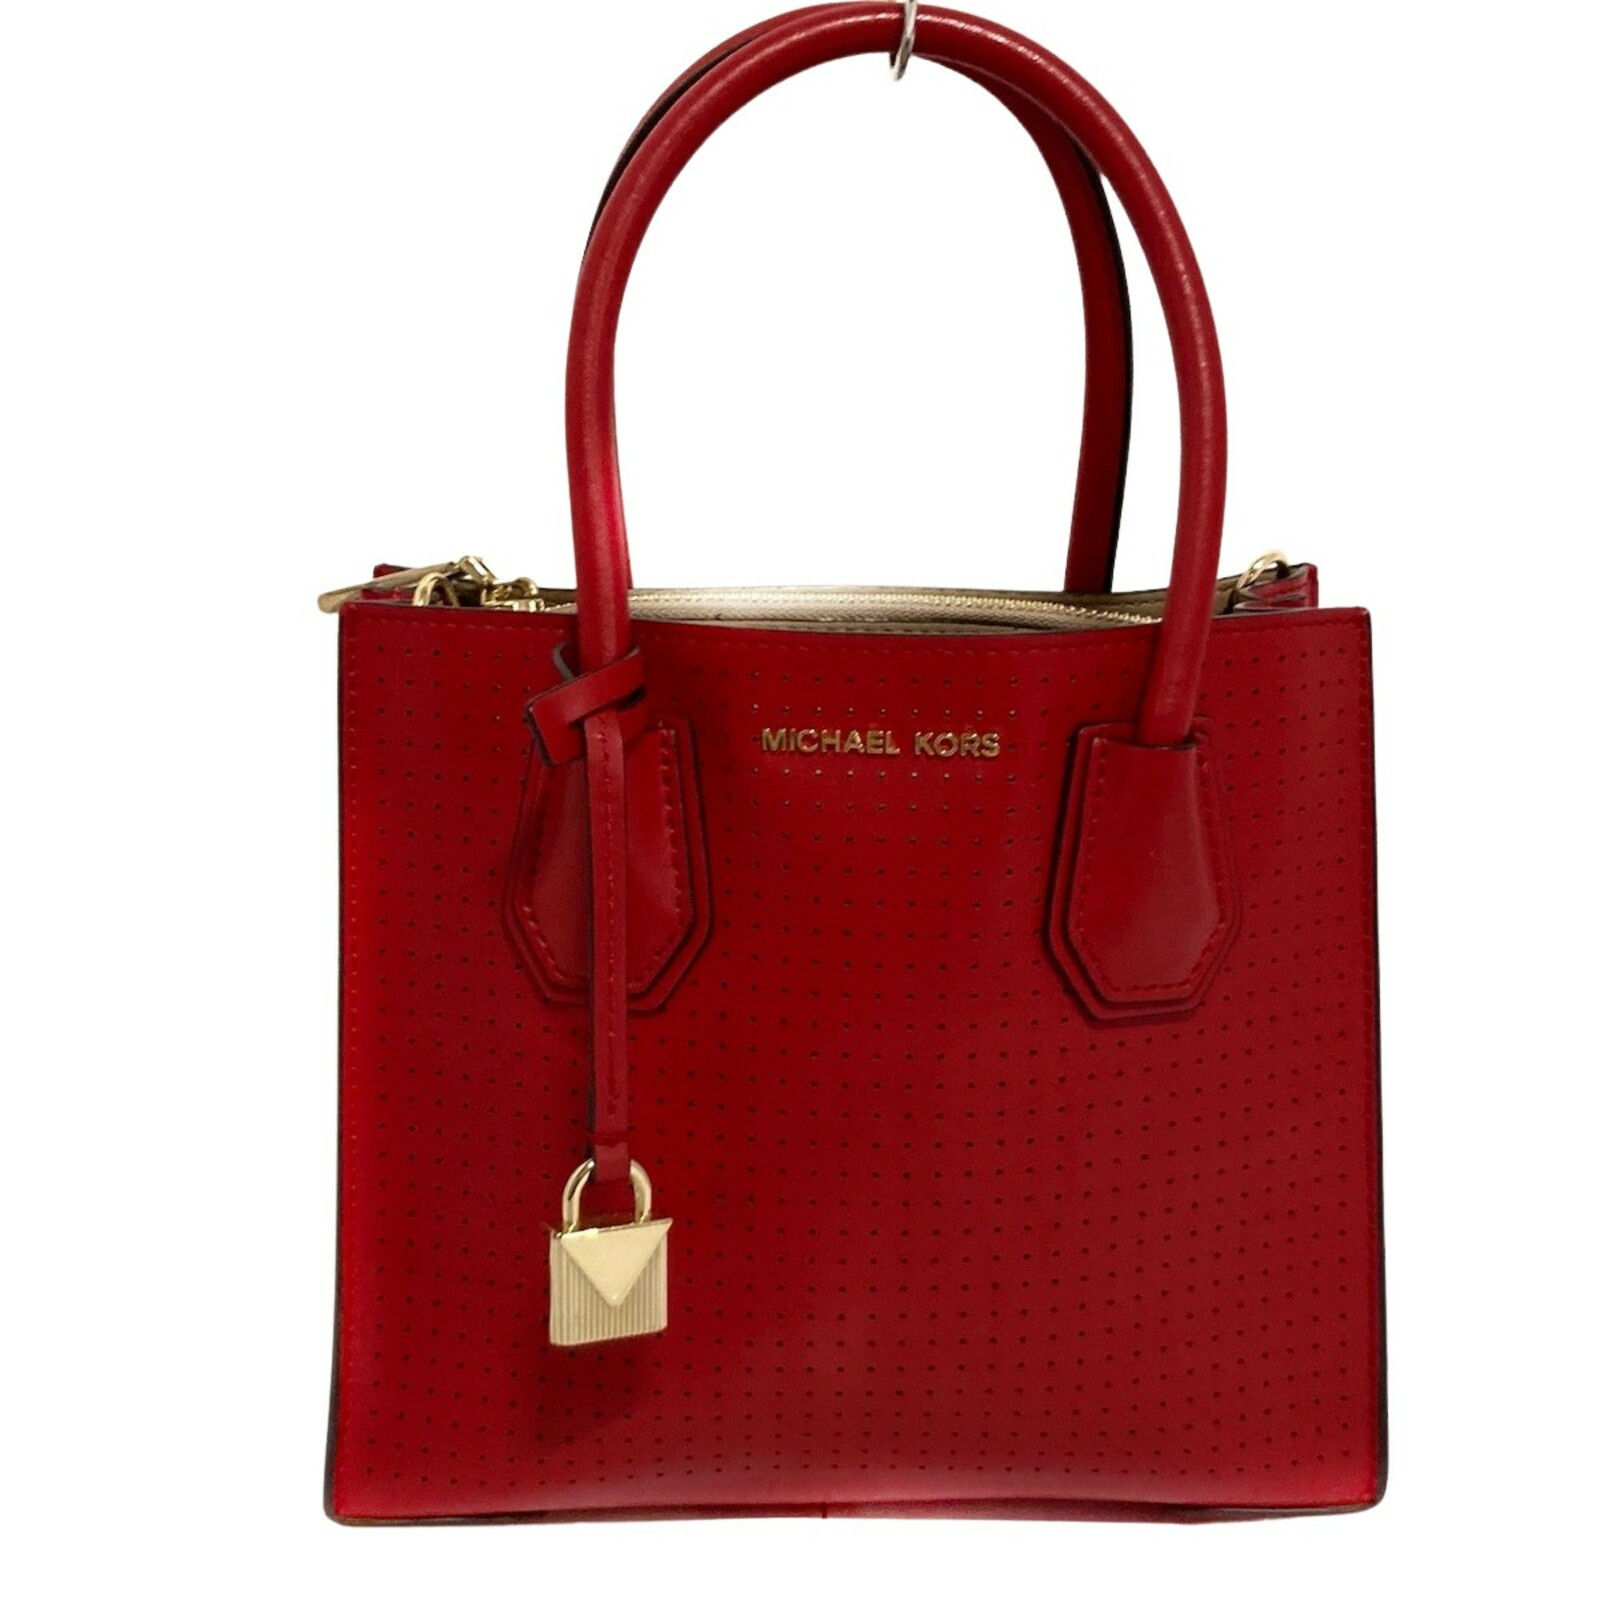 MICHAEL KORS Women's Handtasche aus Leder in Rot